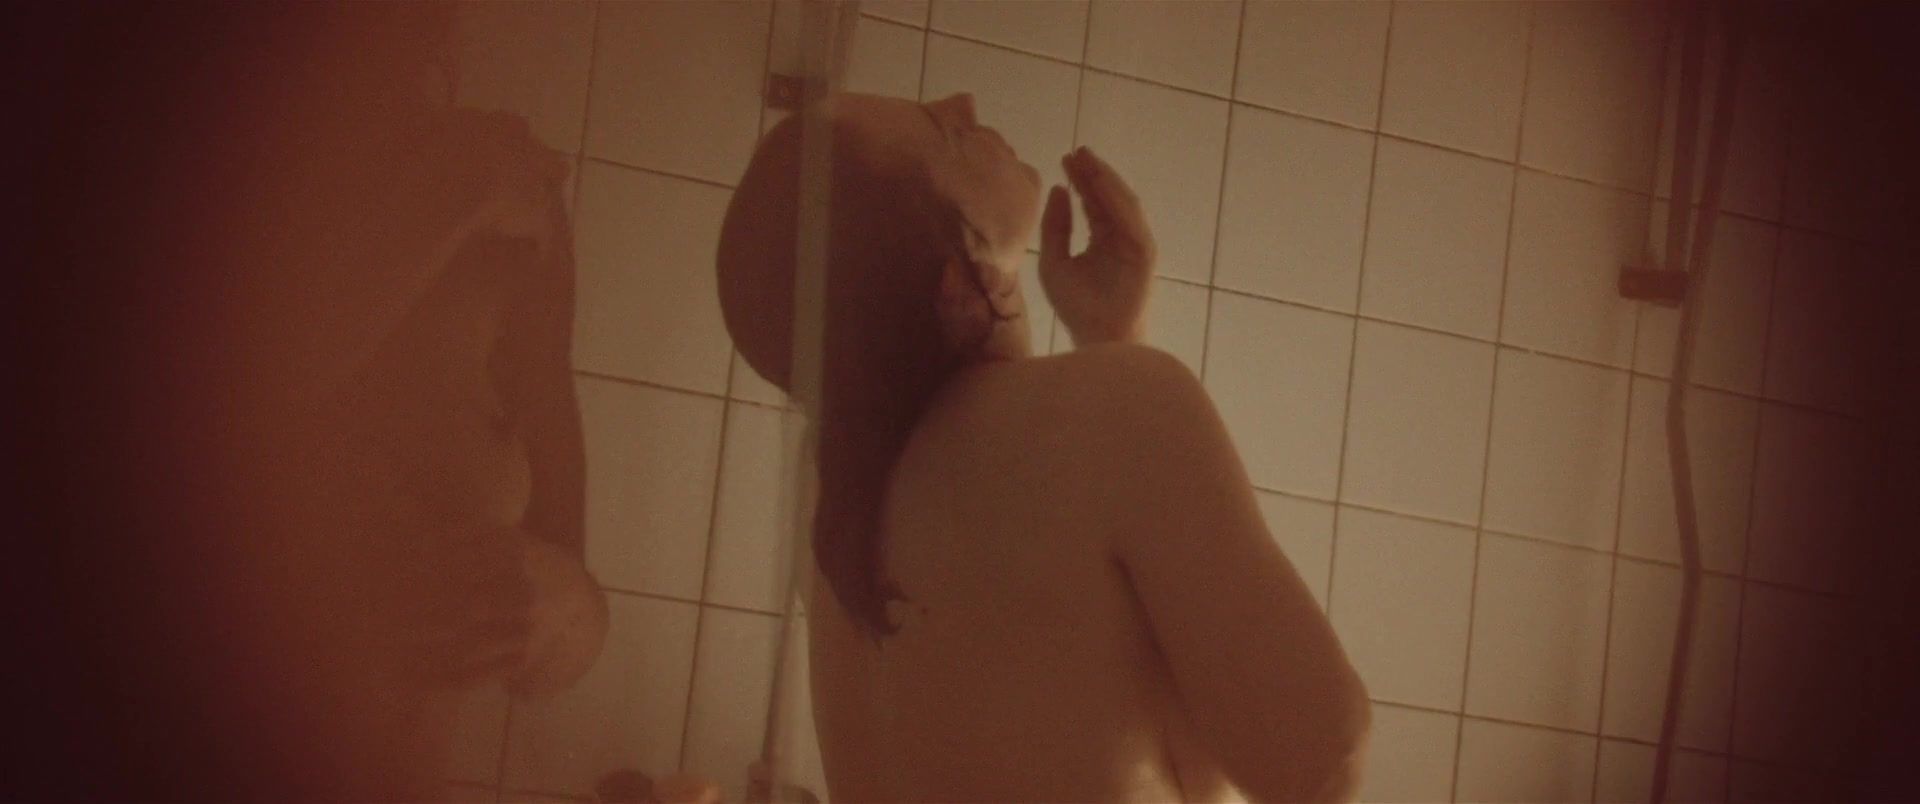 Workout Vica Kerekes nude - Pribeh kmotra (2013) Big Ass - 2